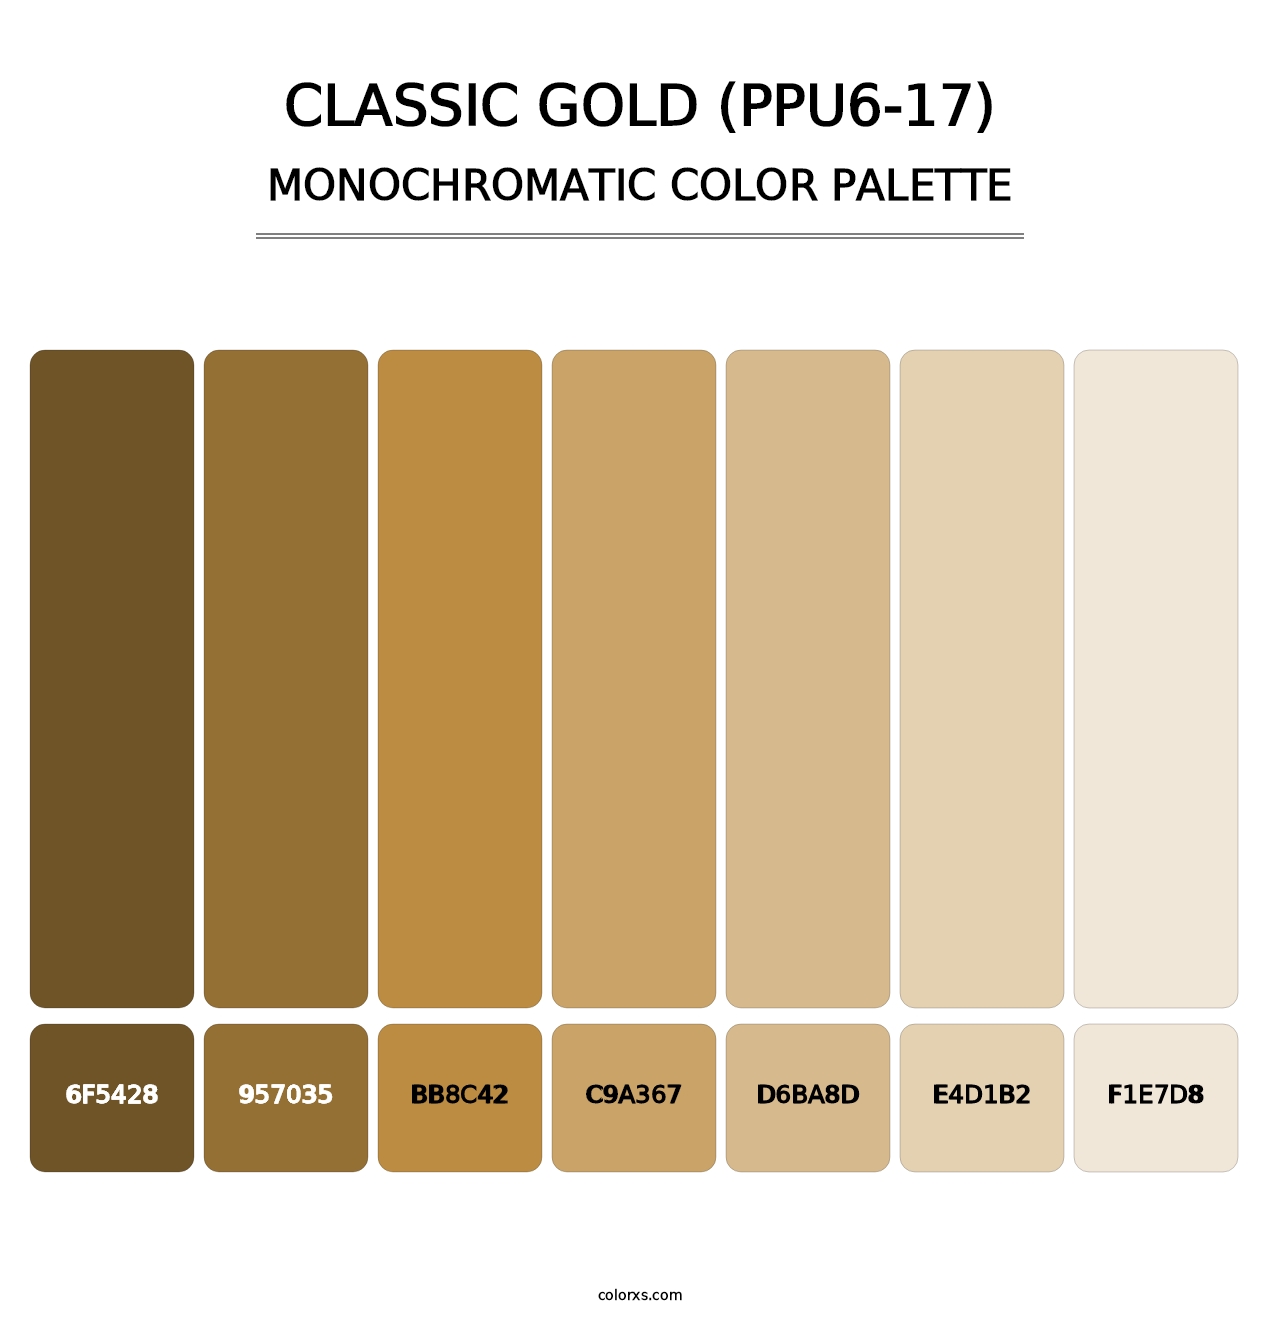 Classic Gold (PPU6-17) - Monochromatic Color Palette